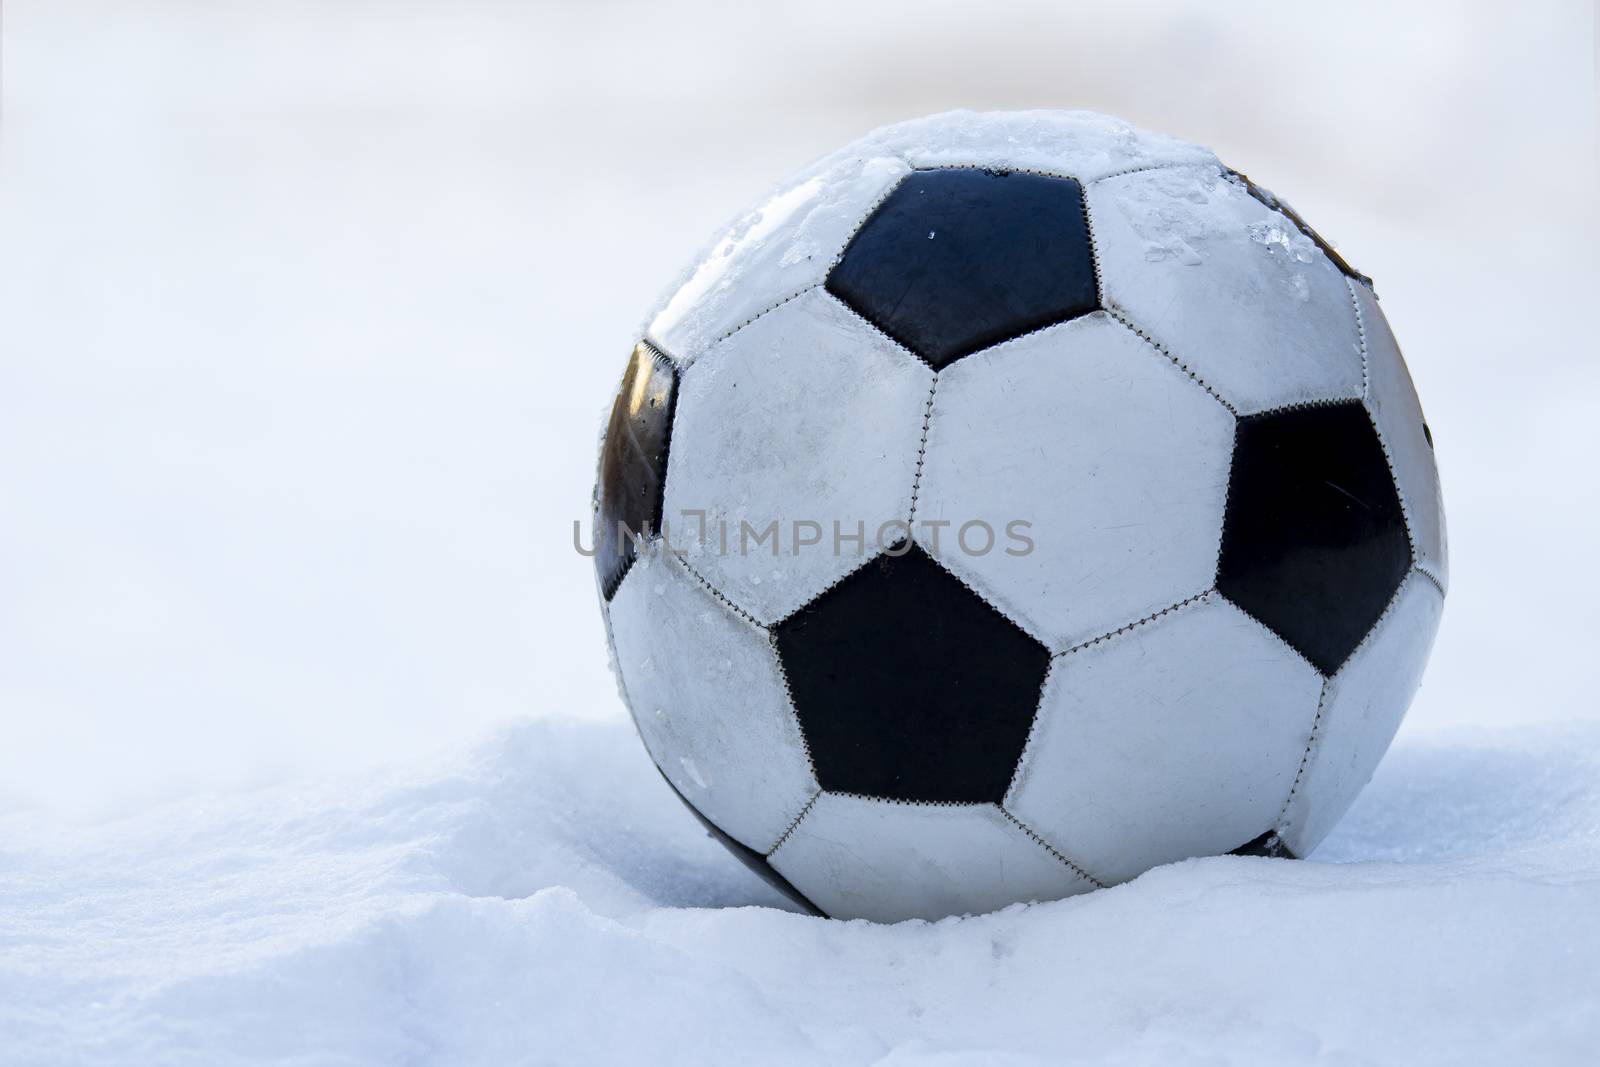 Football, soccer ball on snow by oasisamuel